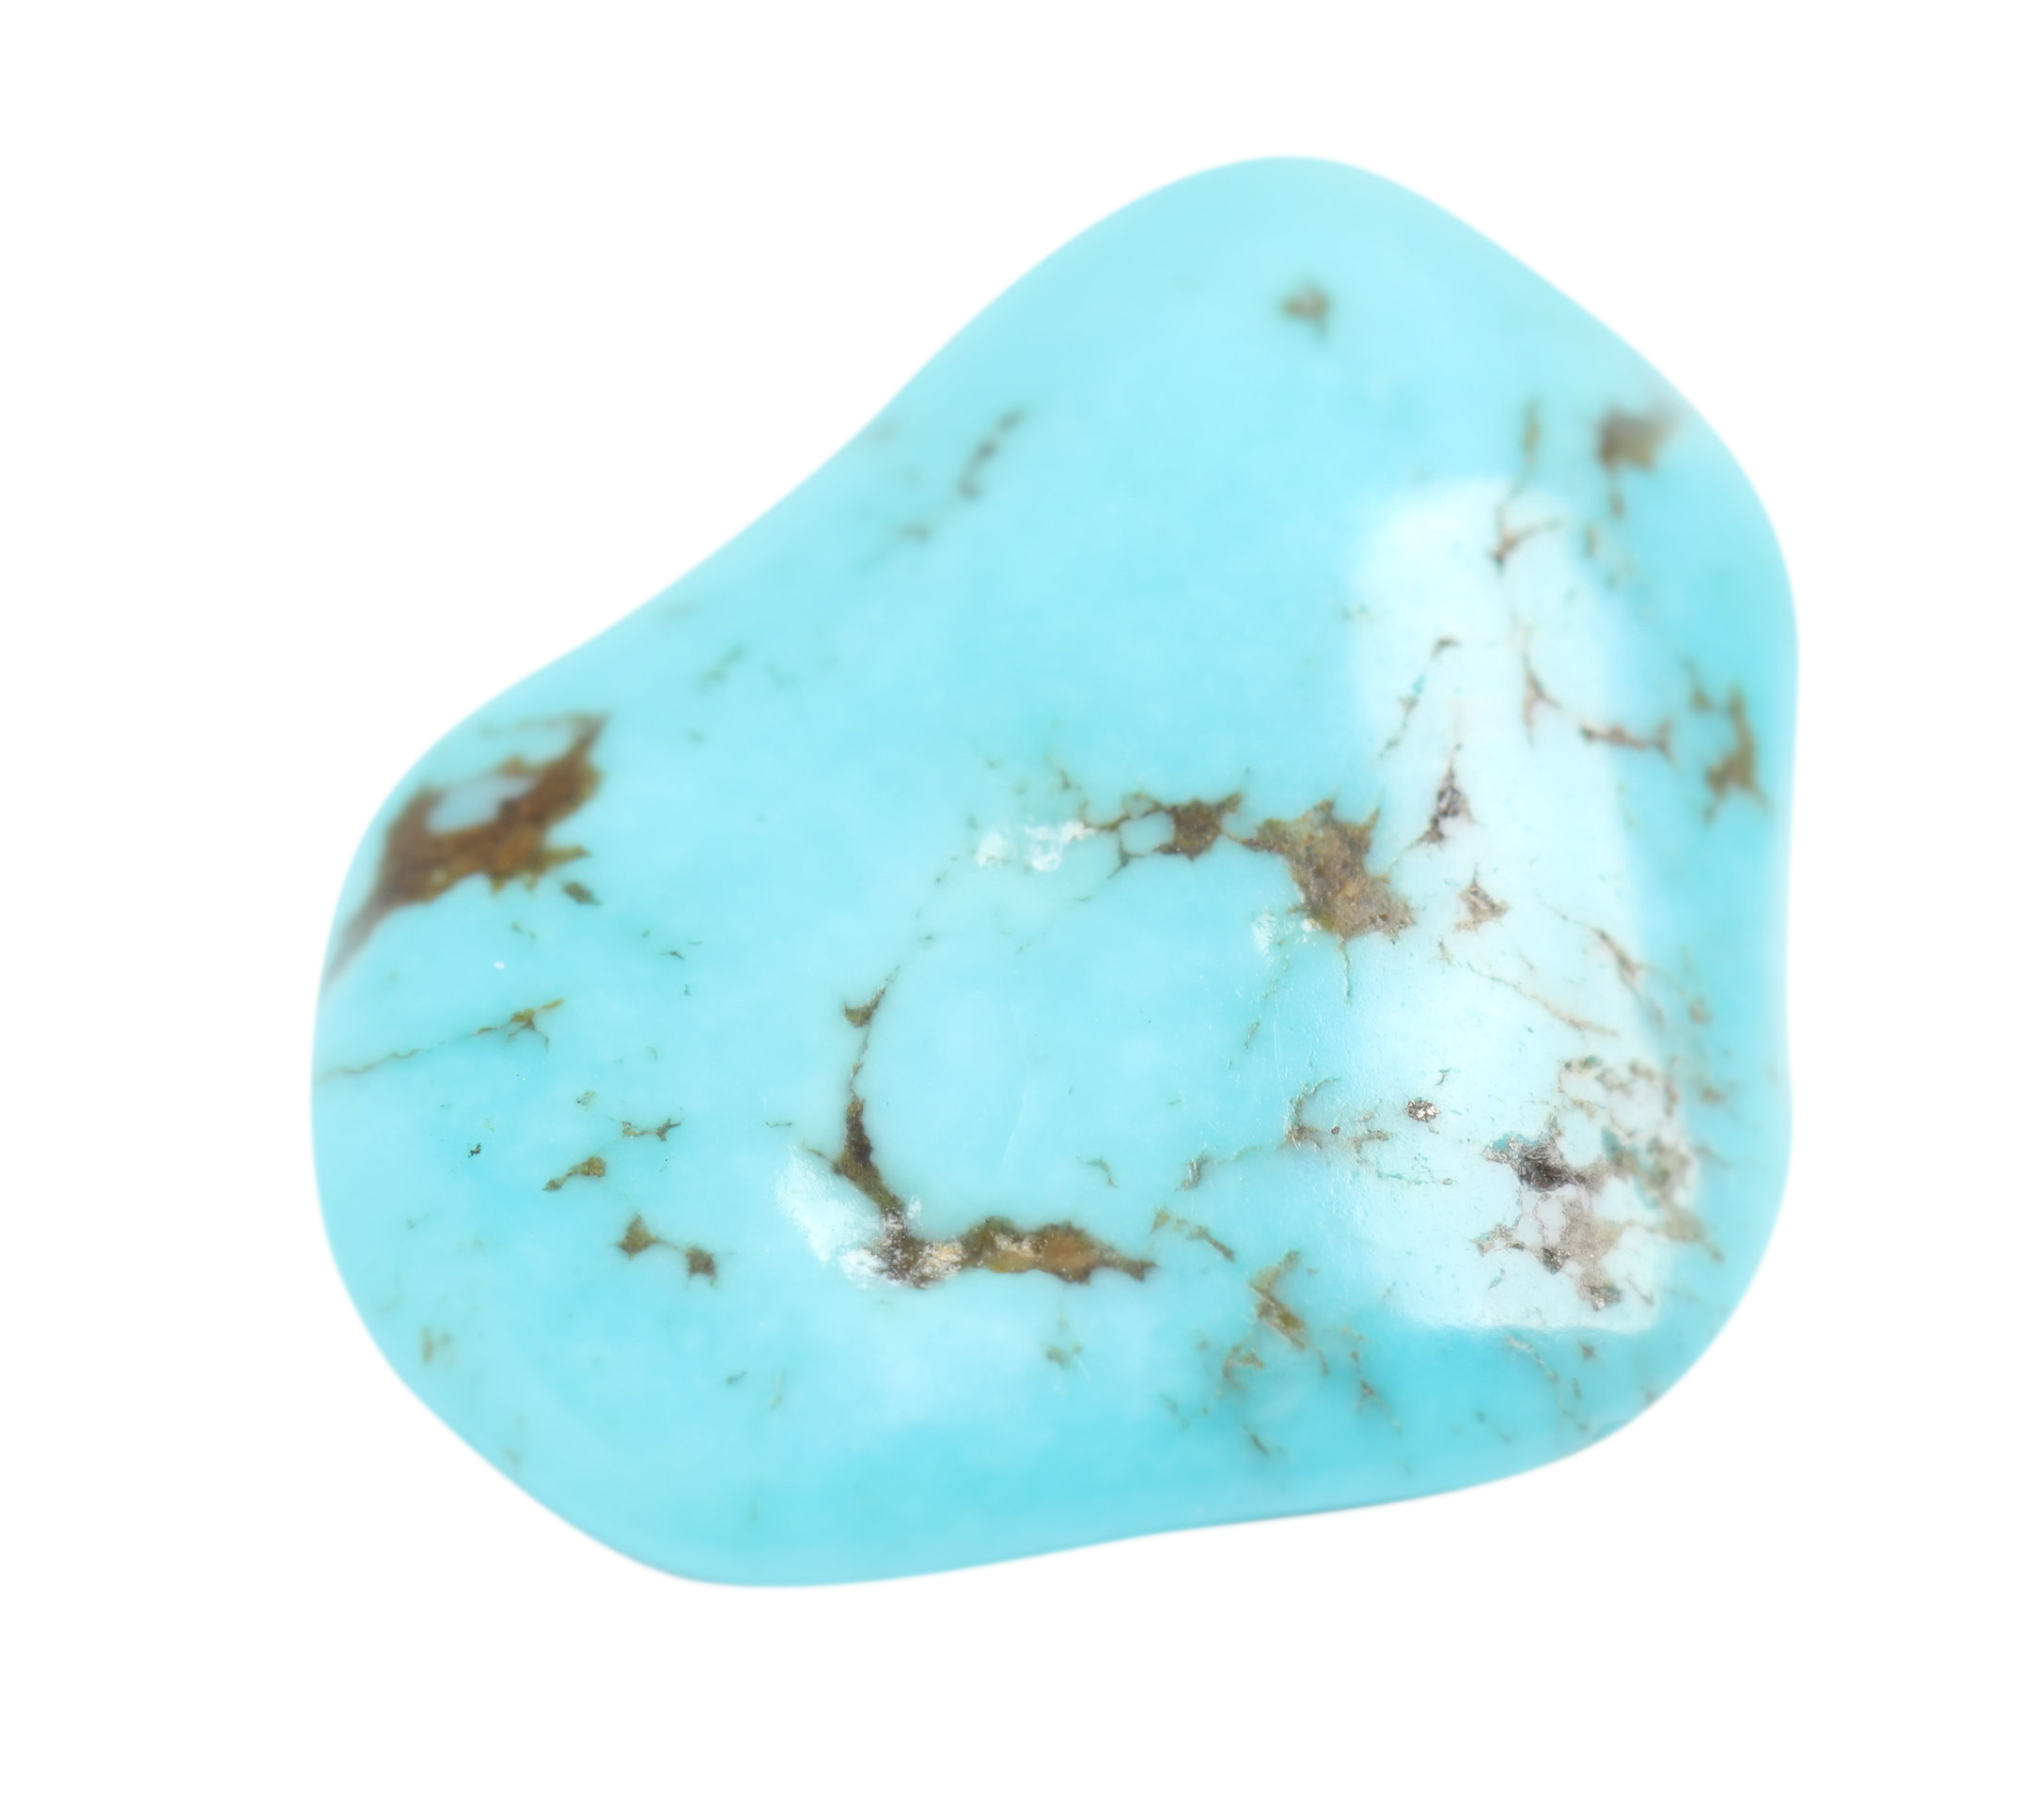 Turquoise properties, Turquoise stone benefits, Pierre's natural beauty, Joyful energy, 2170x1940 HD Desktop